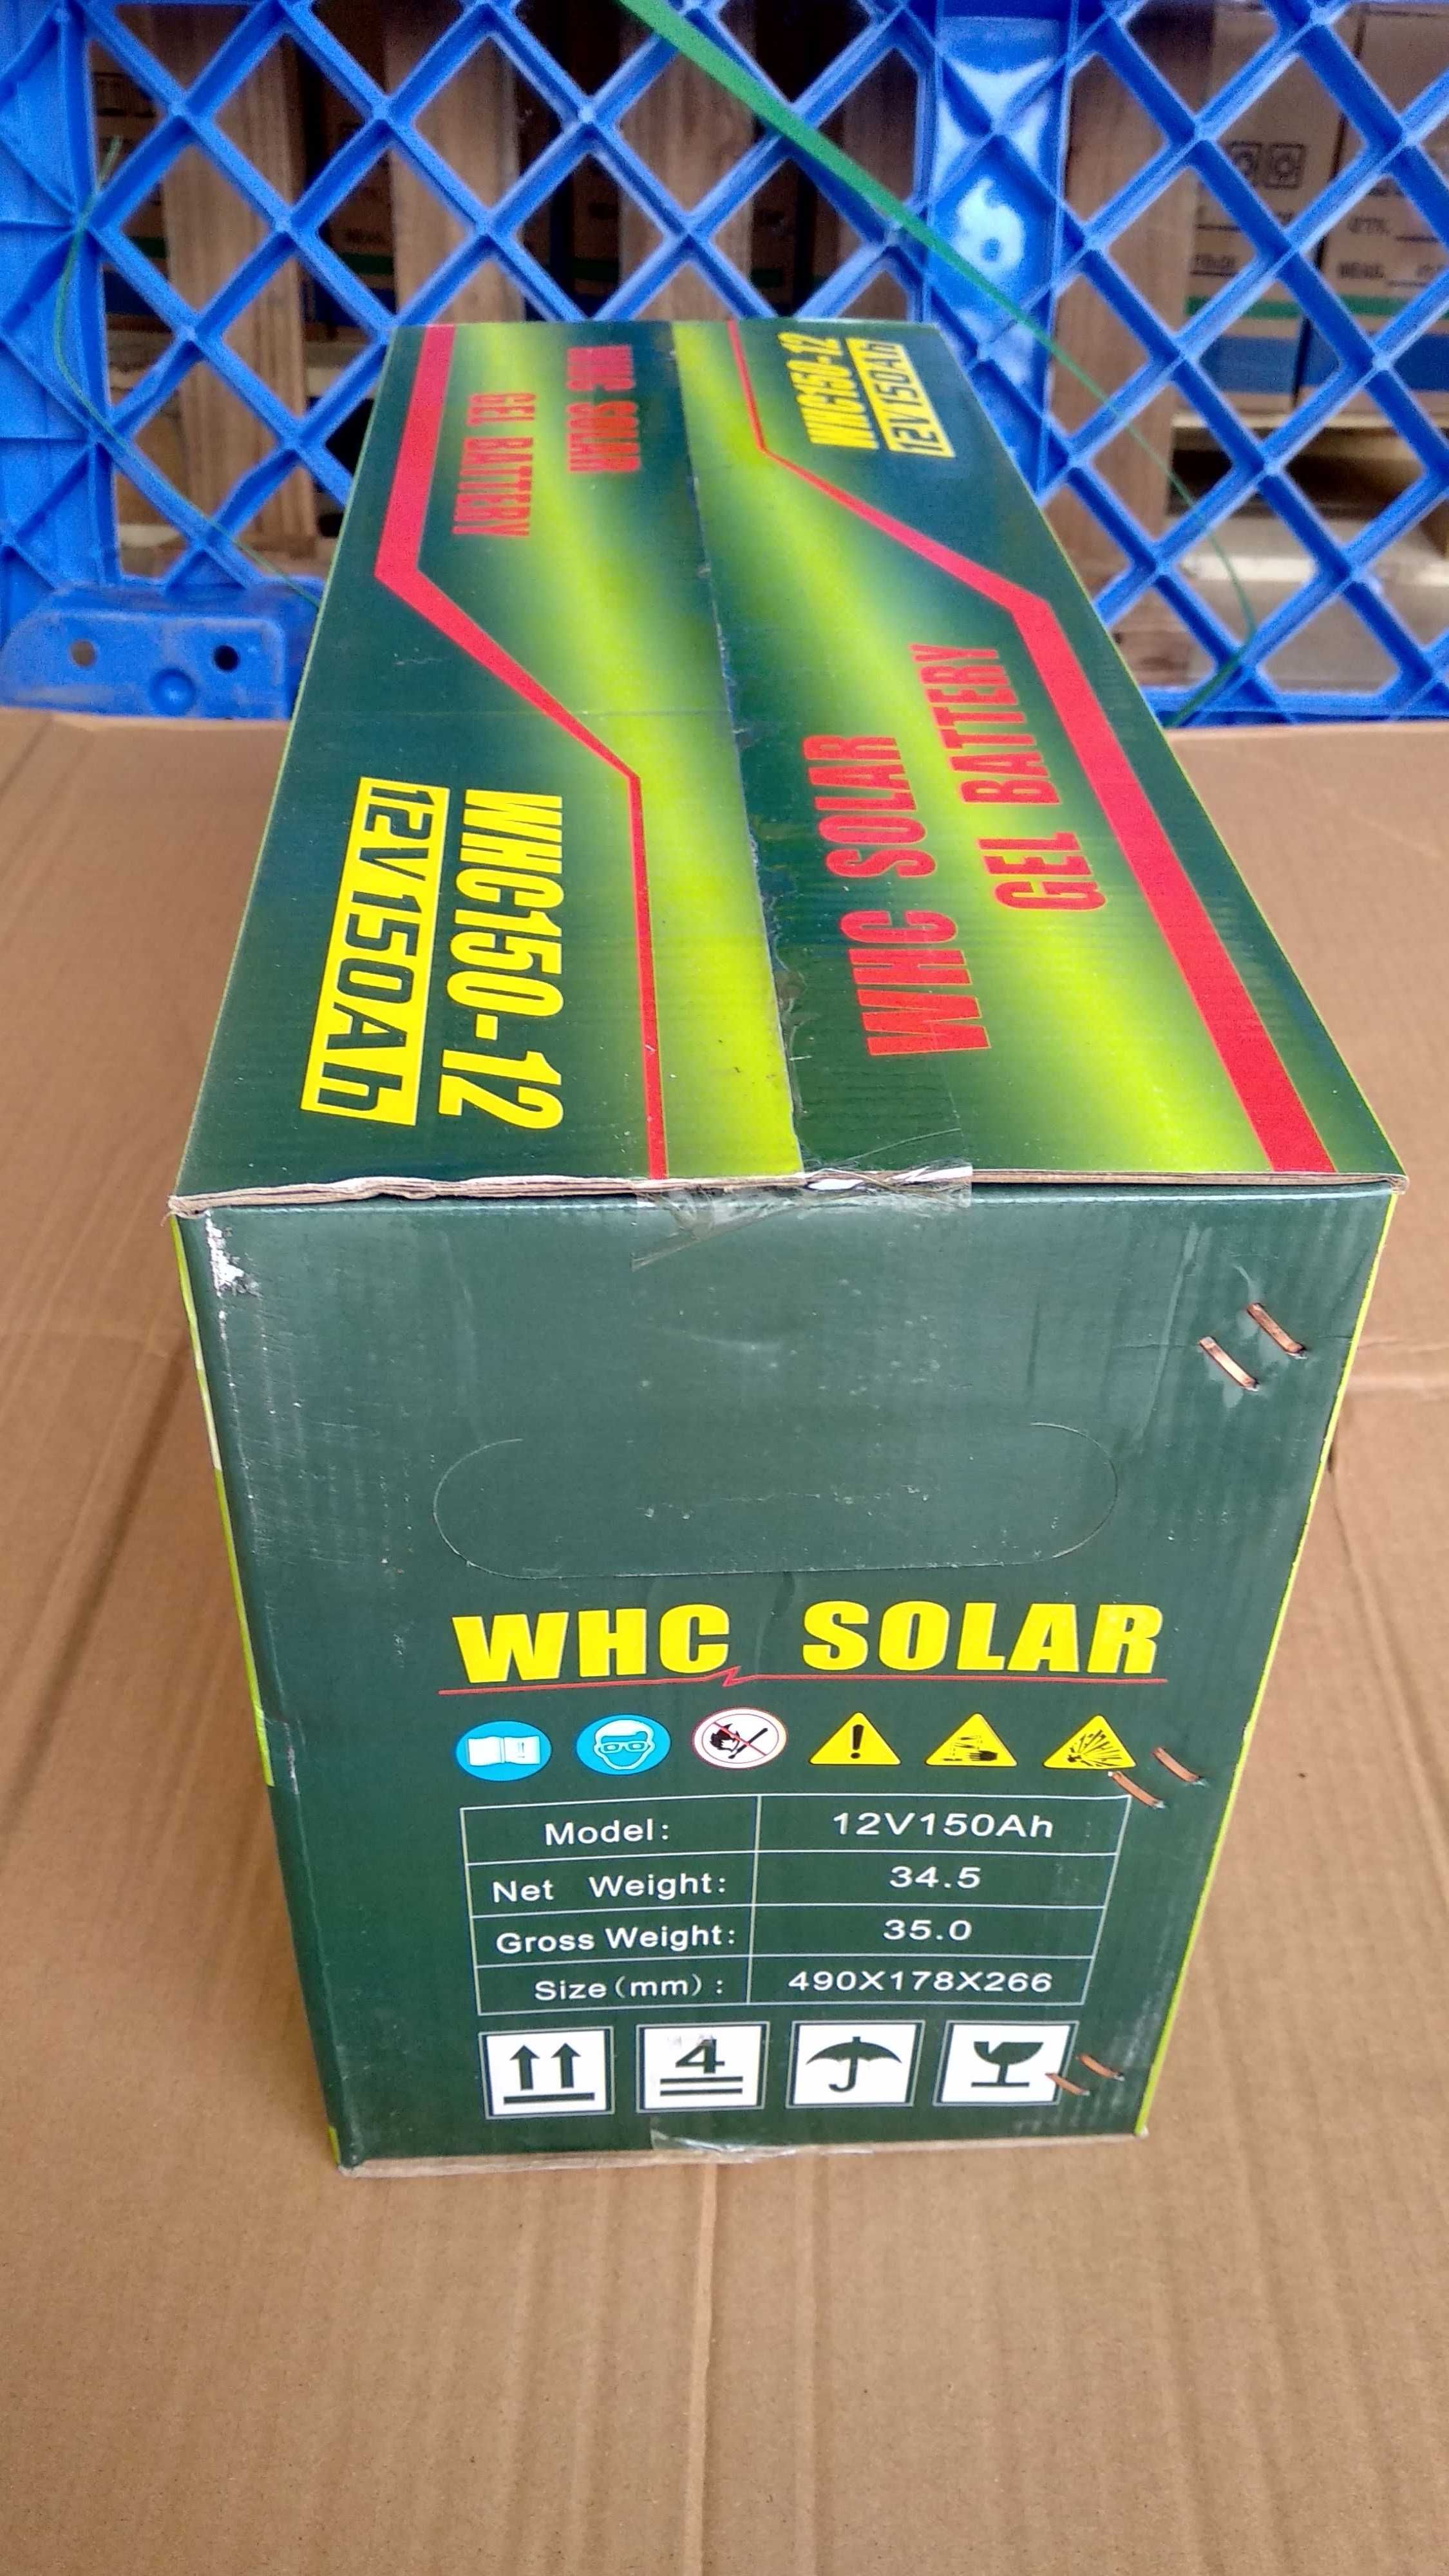 WHC Solar Gel battery 12V 150Ah Гелевий тяговий акумулятор інвертор